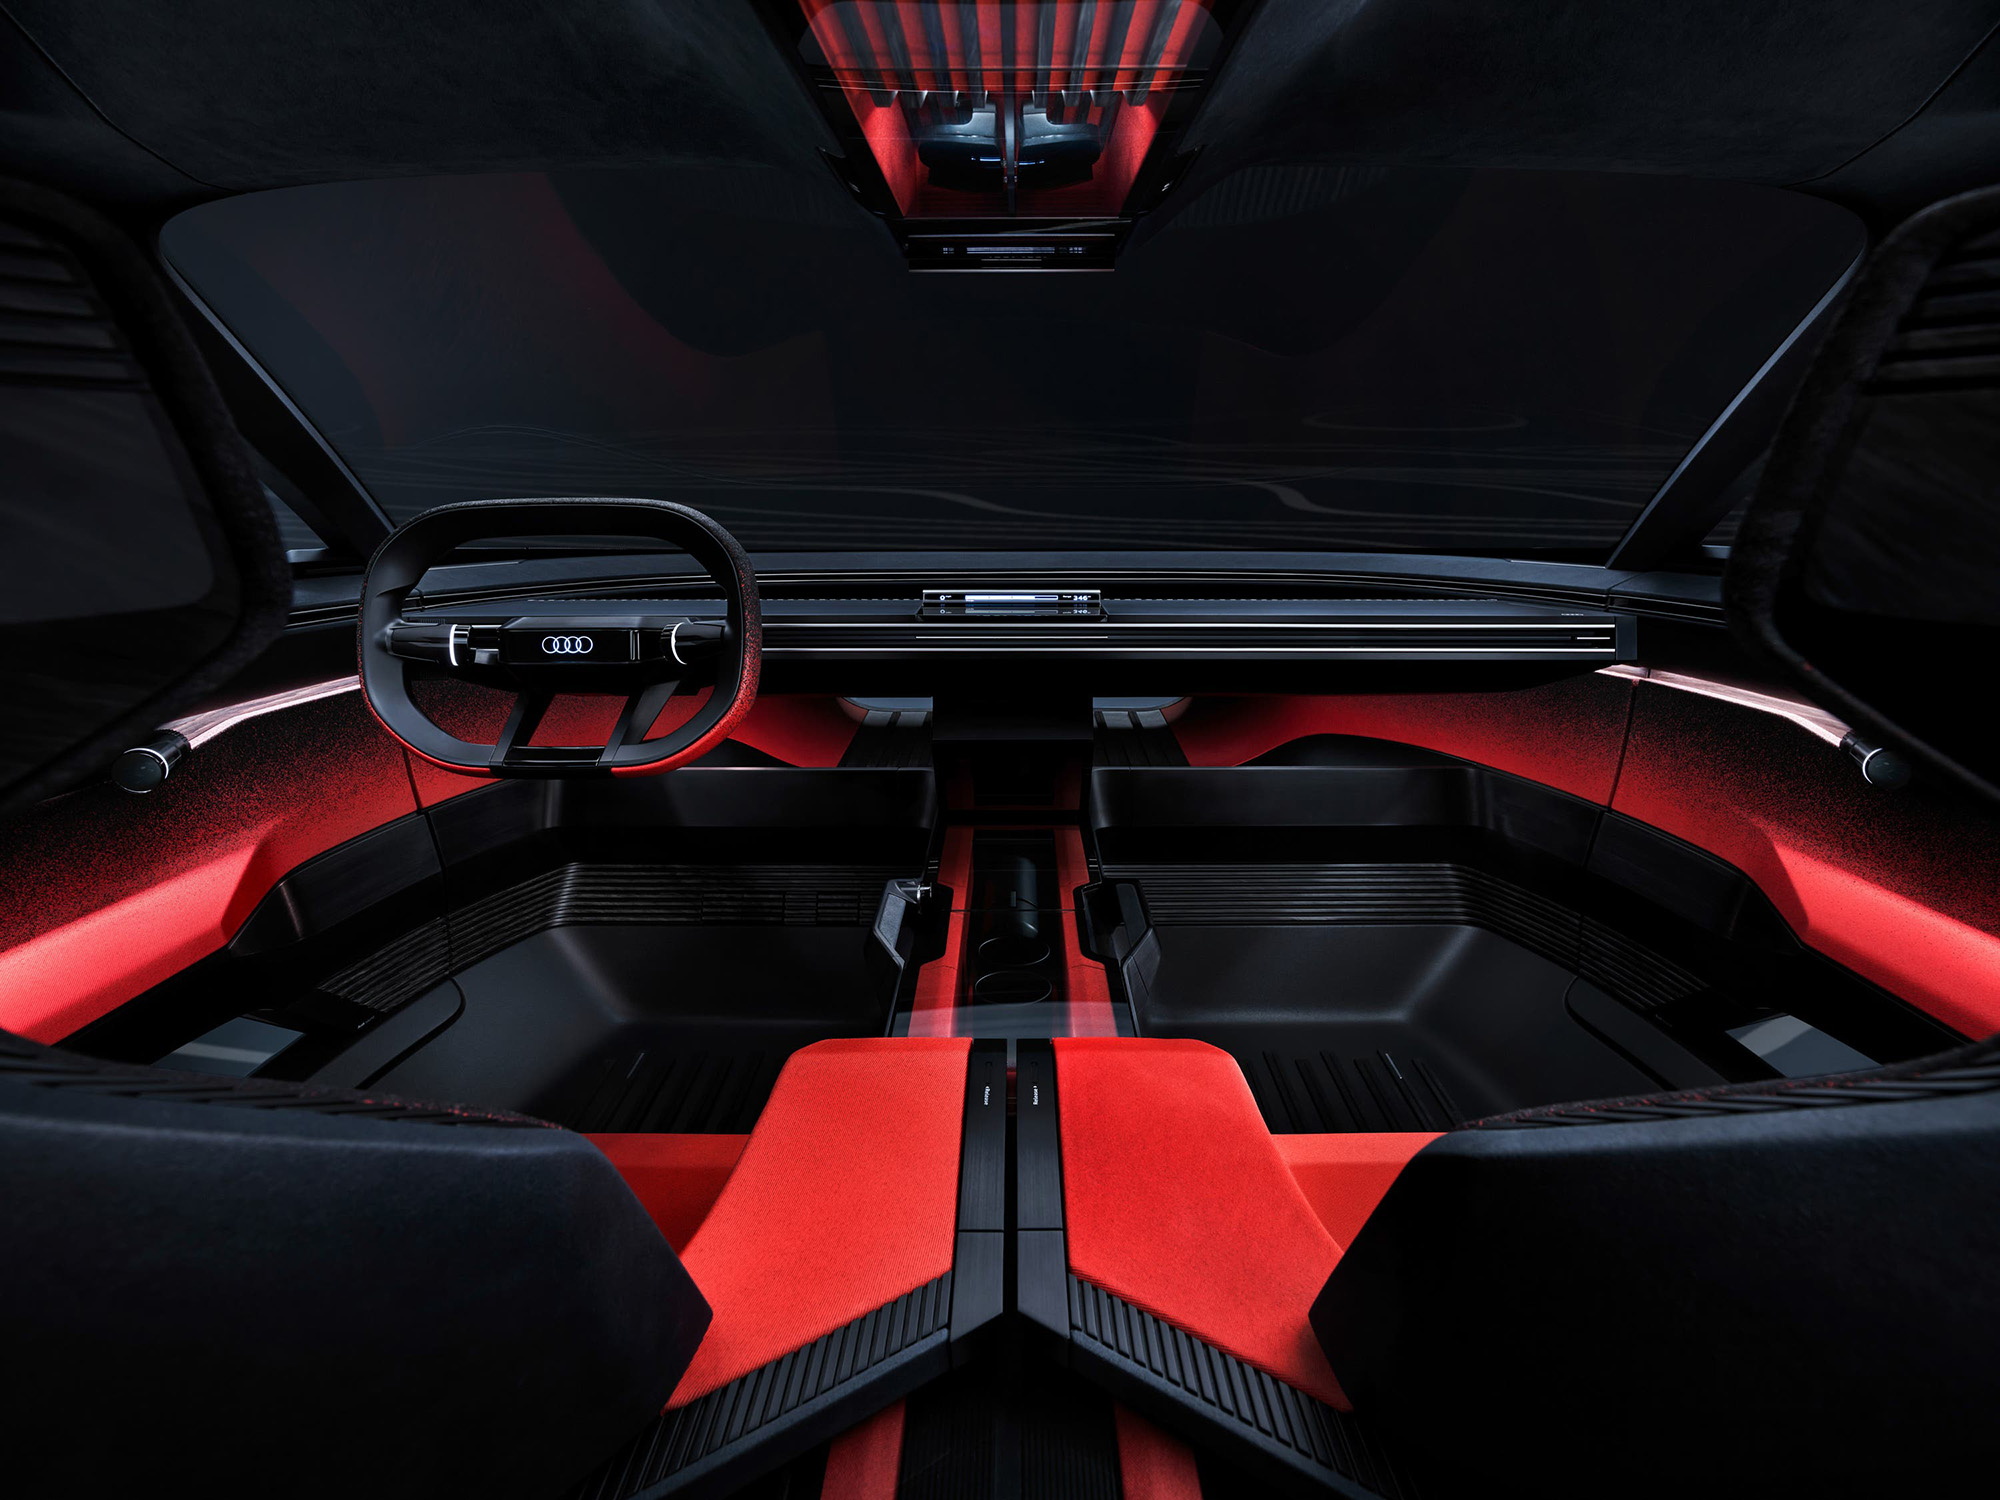 Audi Activesphere concept futuristic interior, via PA